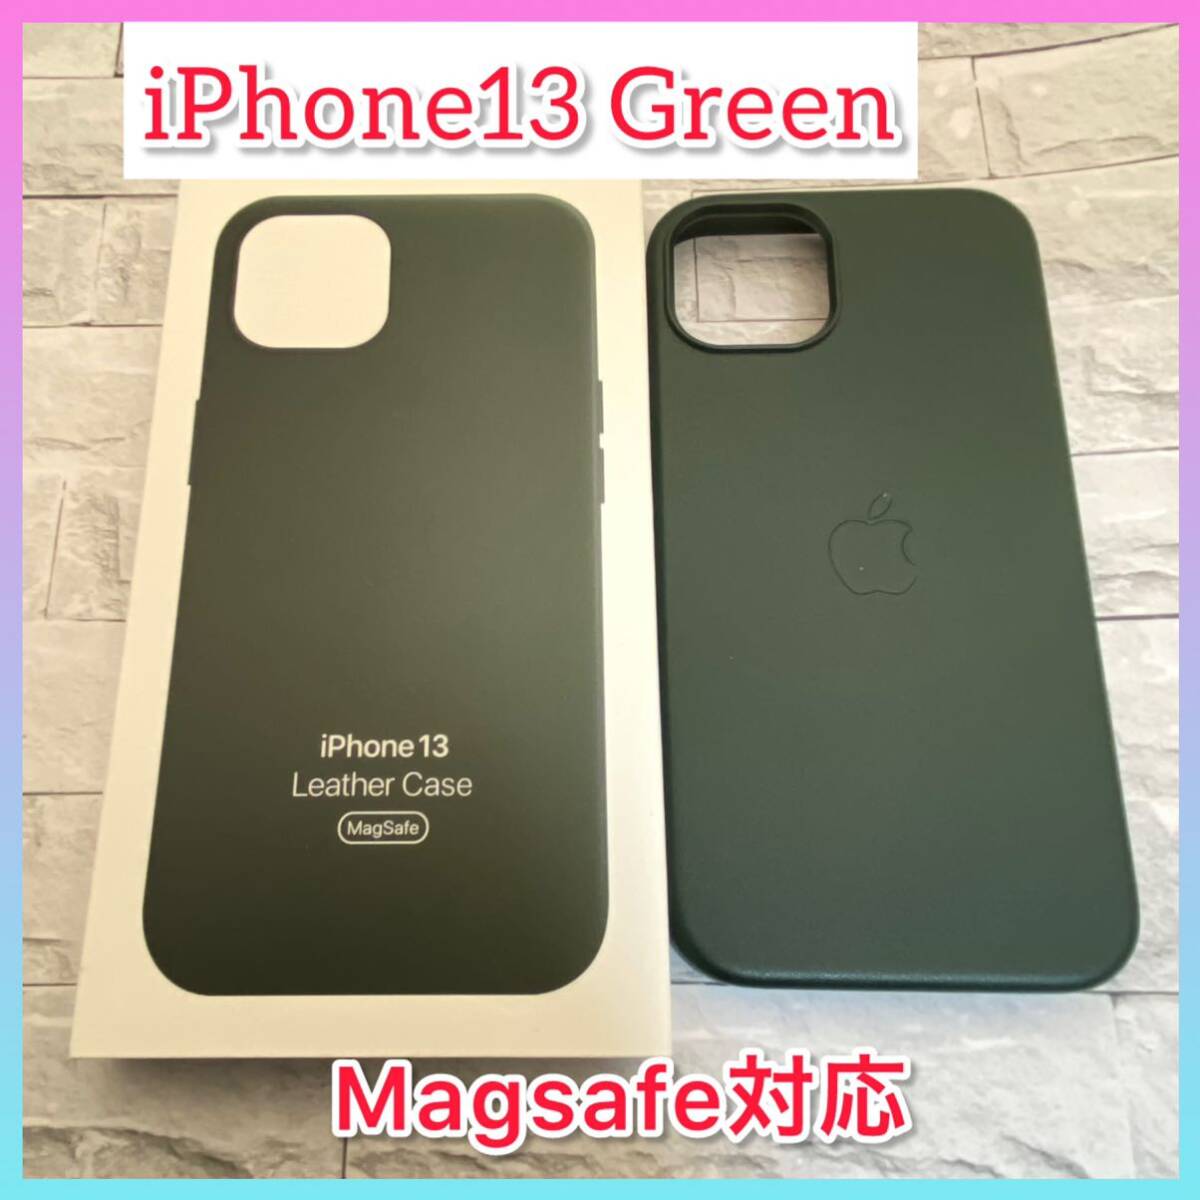 iPhoneケース iPhone13ケース Green スマホケース レザーケース レザーカバー 外箱付き 互換品 純正互換品 アイフォン13ケースの画像1